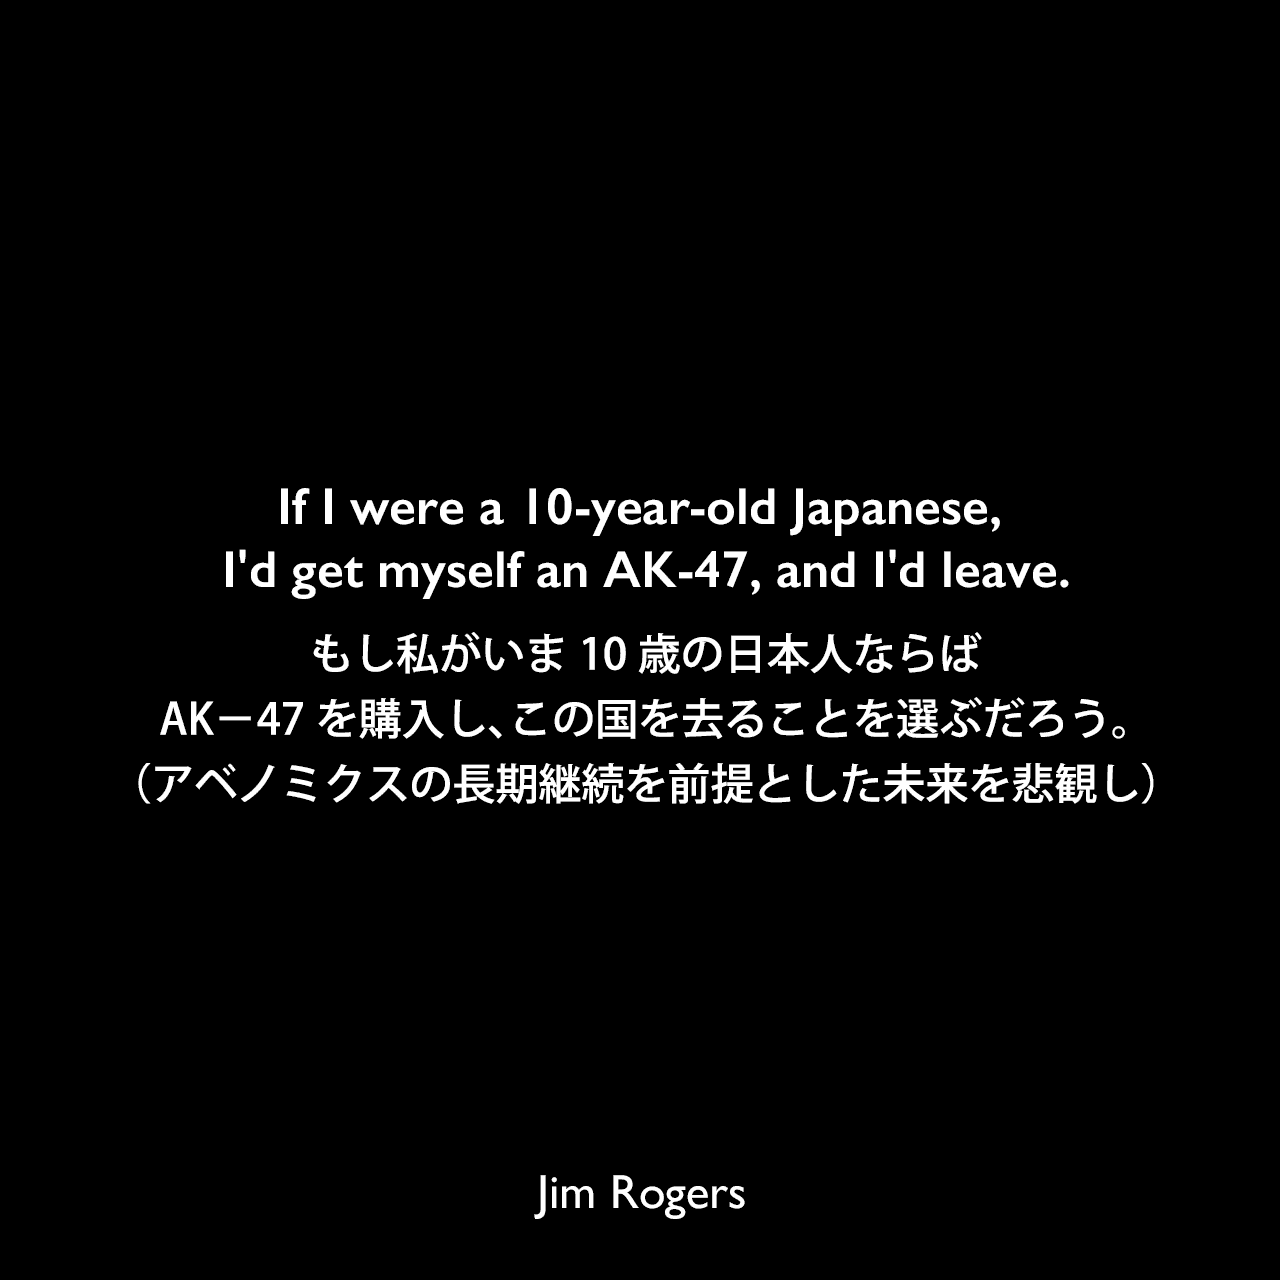 If I were a 10-year-old Japanese, I'd get myself an AK-47, and I'd leave.もし私がいま10歳の日本人ならば、AK－47を購入し、この国を去ることを選ぶだろう。（アベノミクスの長期継続を前提とした未来を悲観し）Jim Rogers